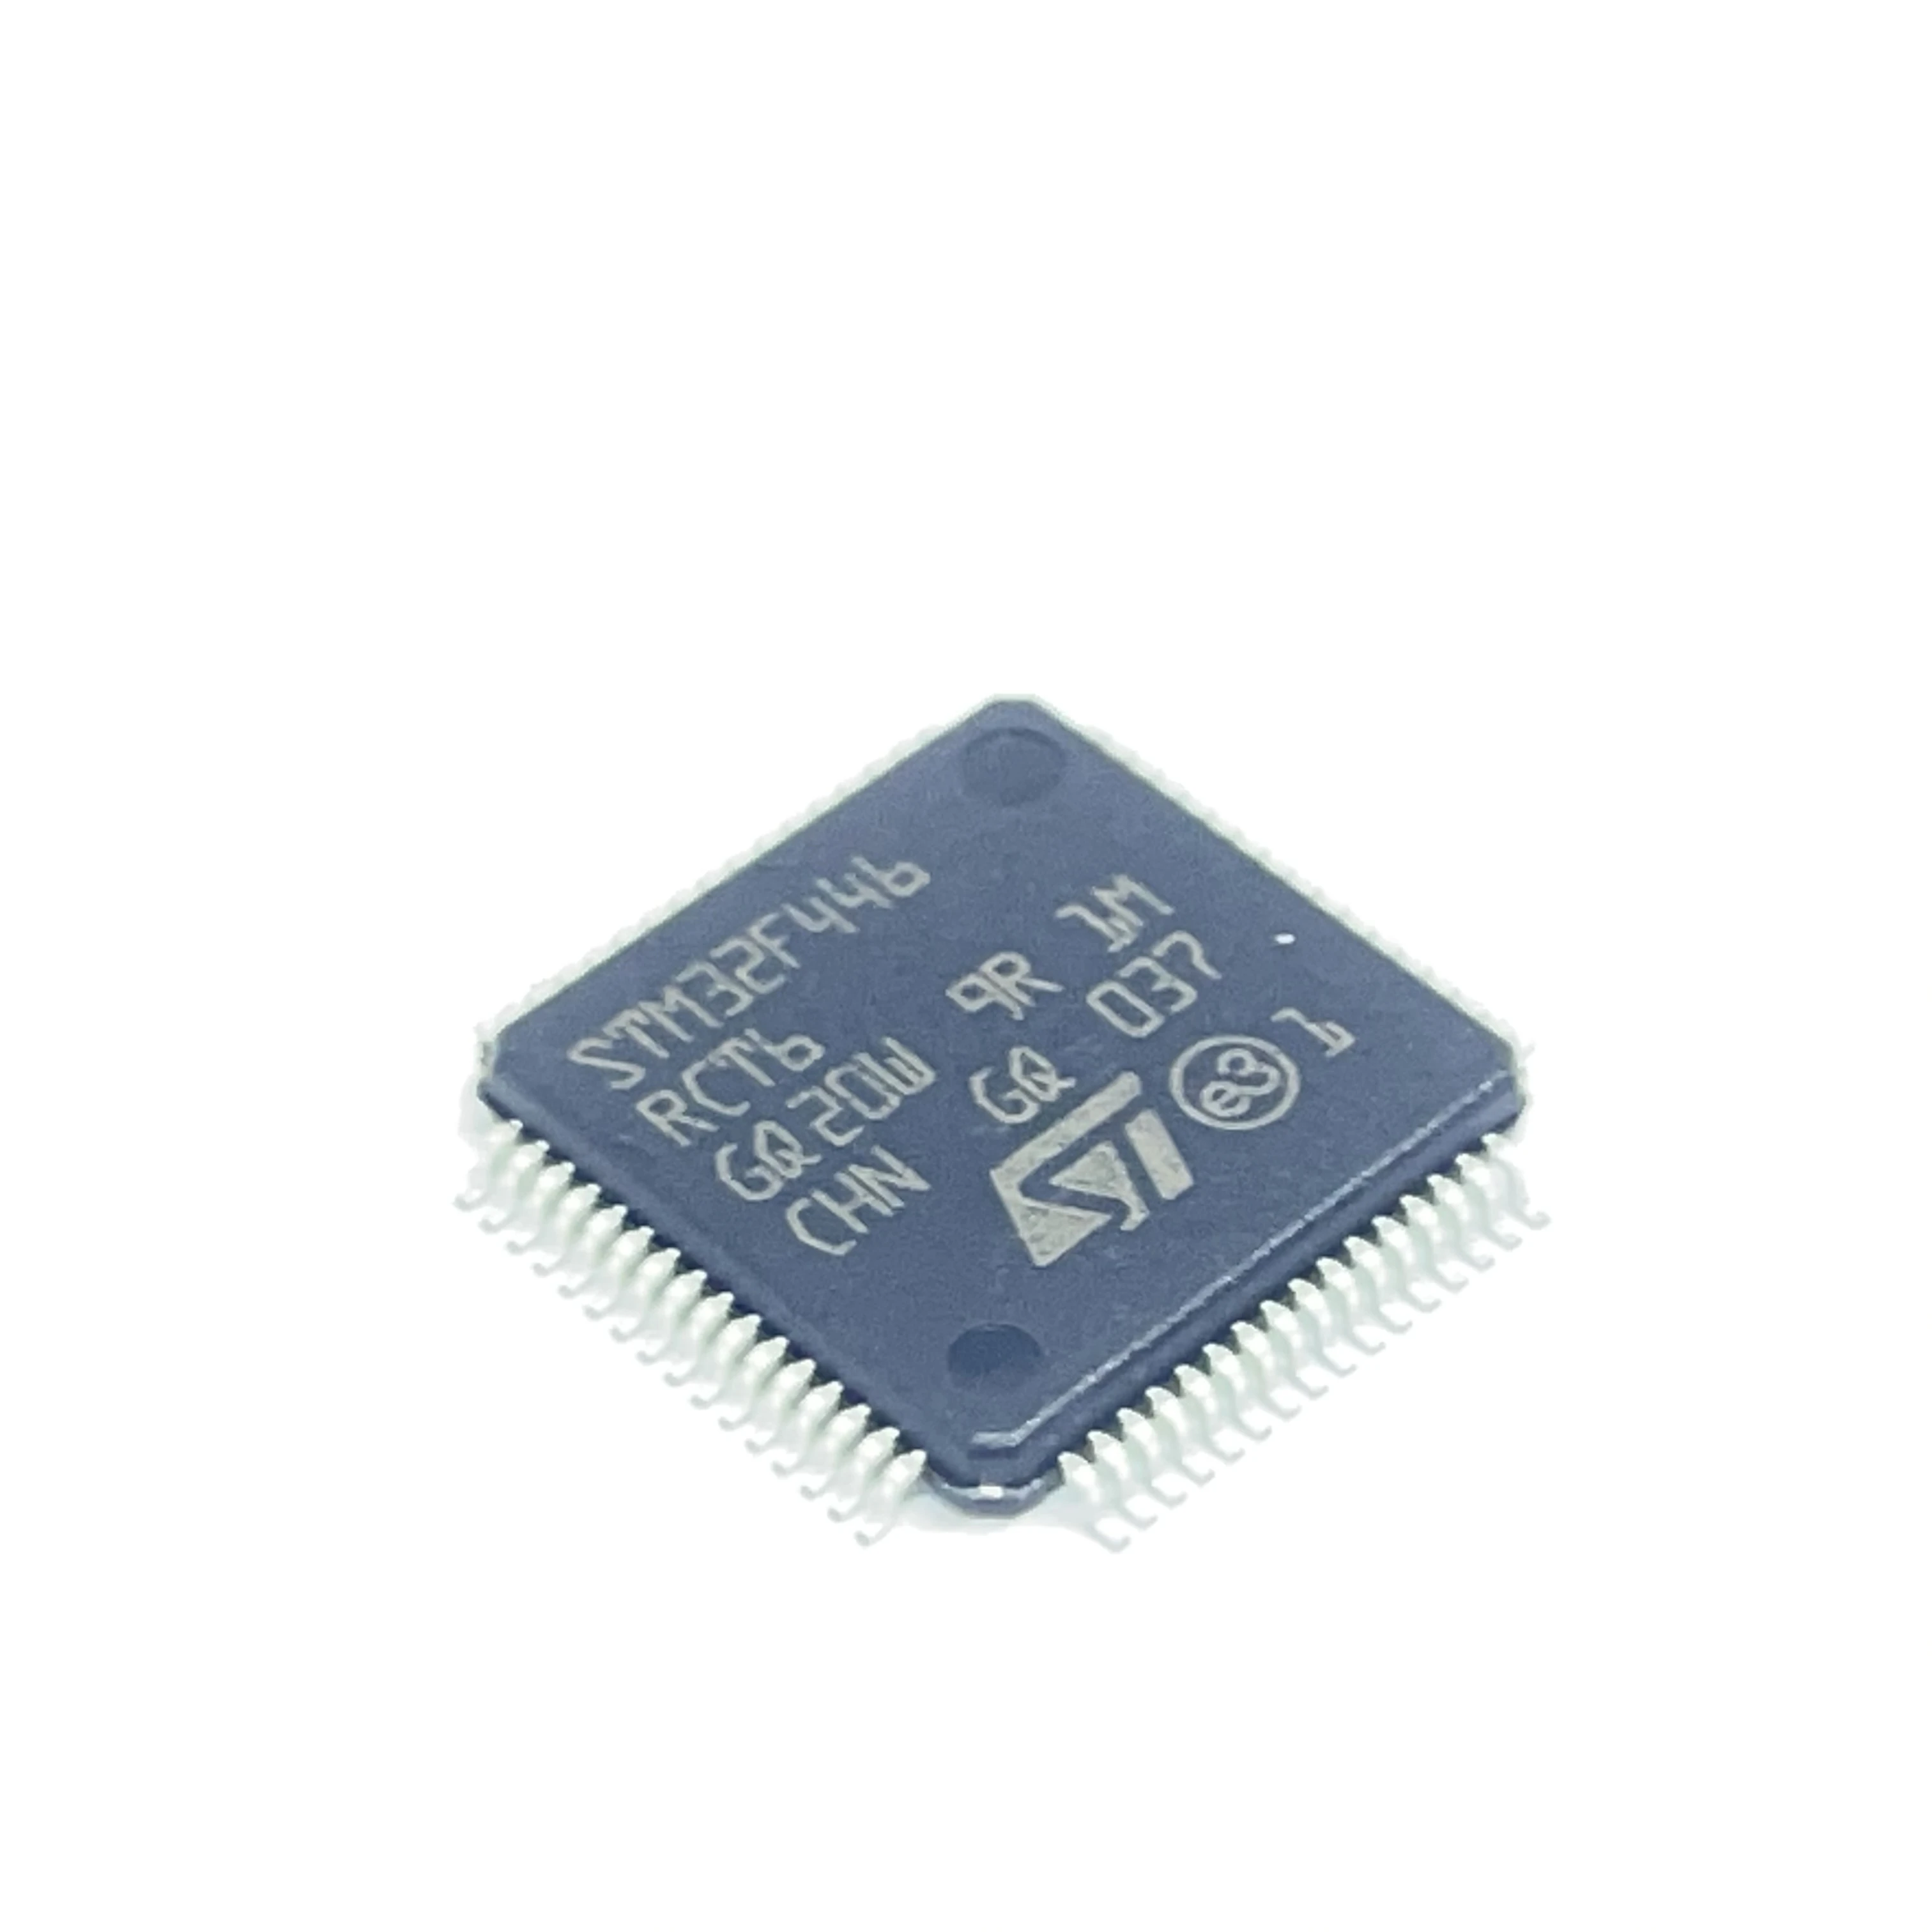 
Merrillchip New & Original in stock STM32 integrated circuit IC MCU 32BIT 256KB FLASH 64LQFP STM32F446RCT6 